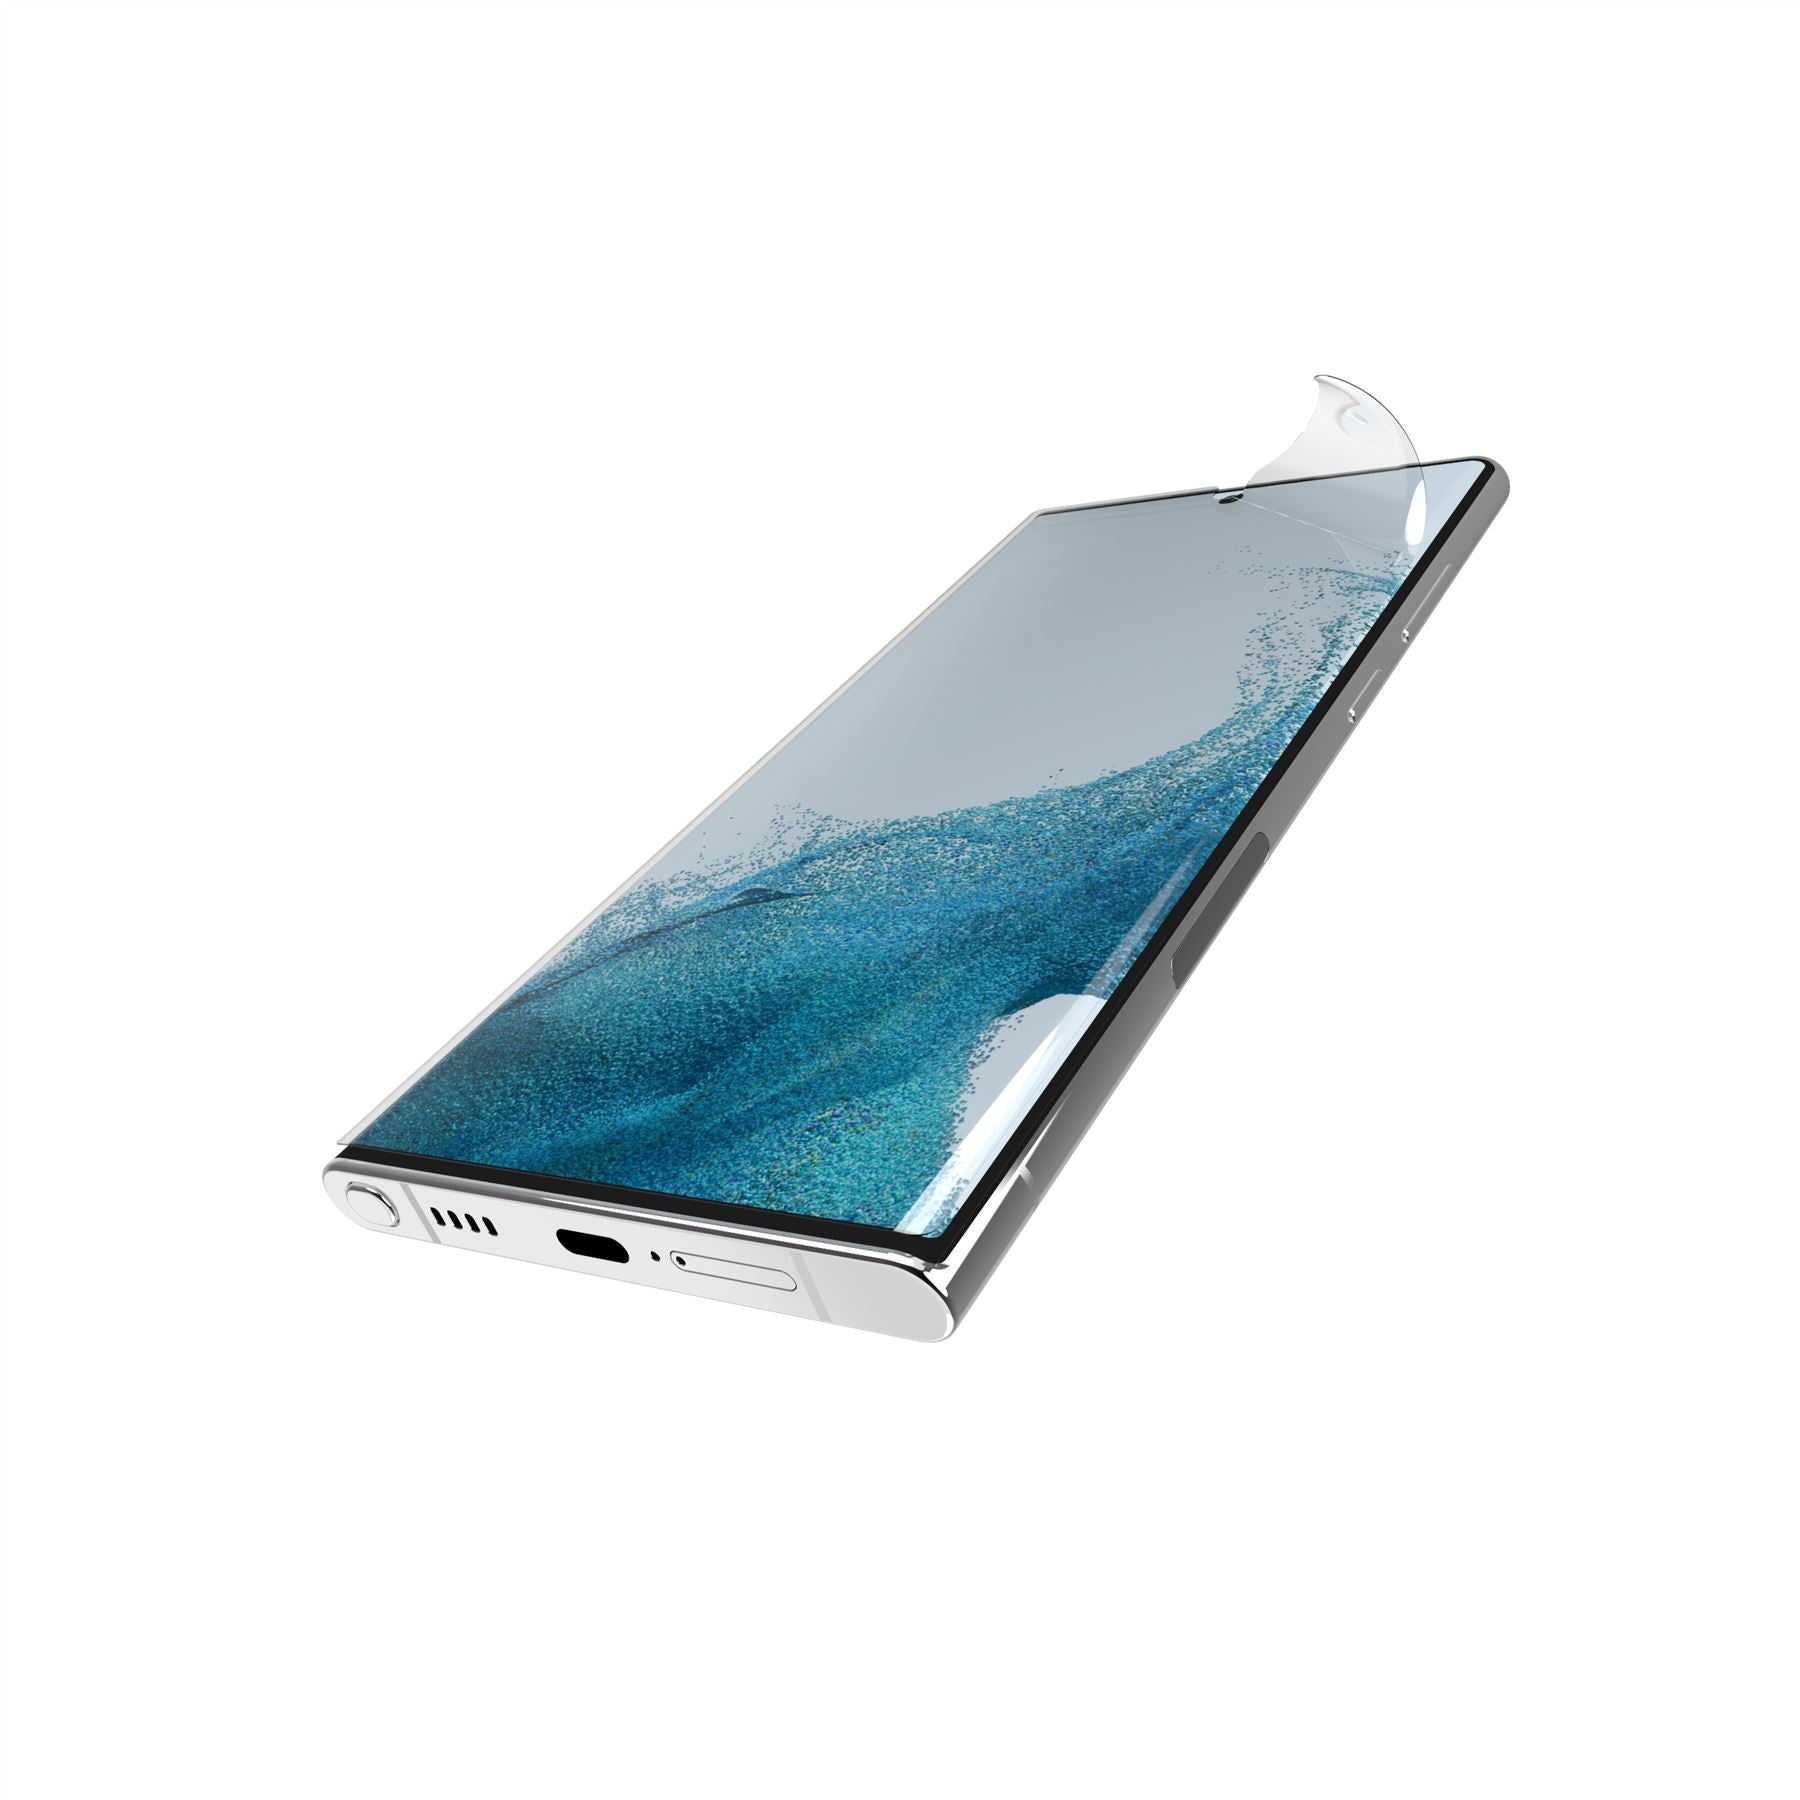 Impact Shield - Samsung Galaxy S22 Ultra Screen Protector